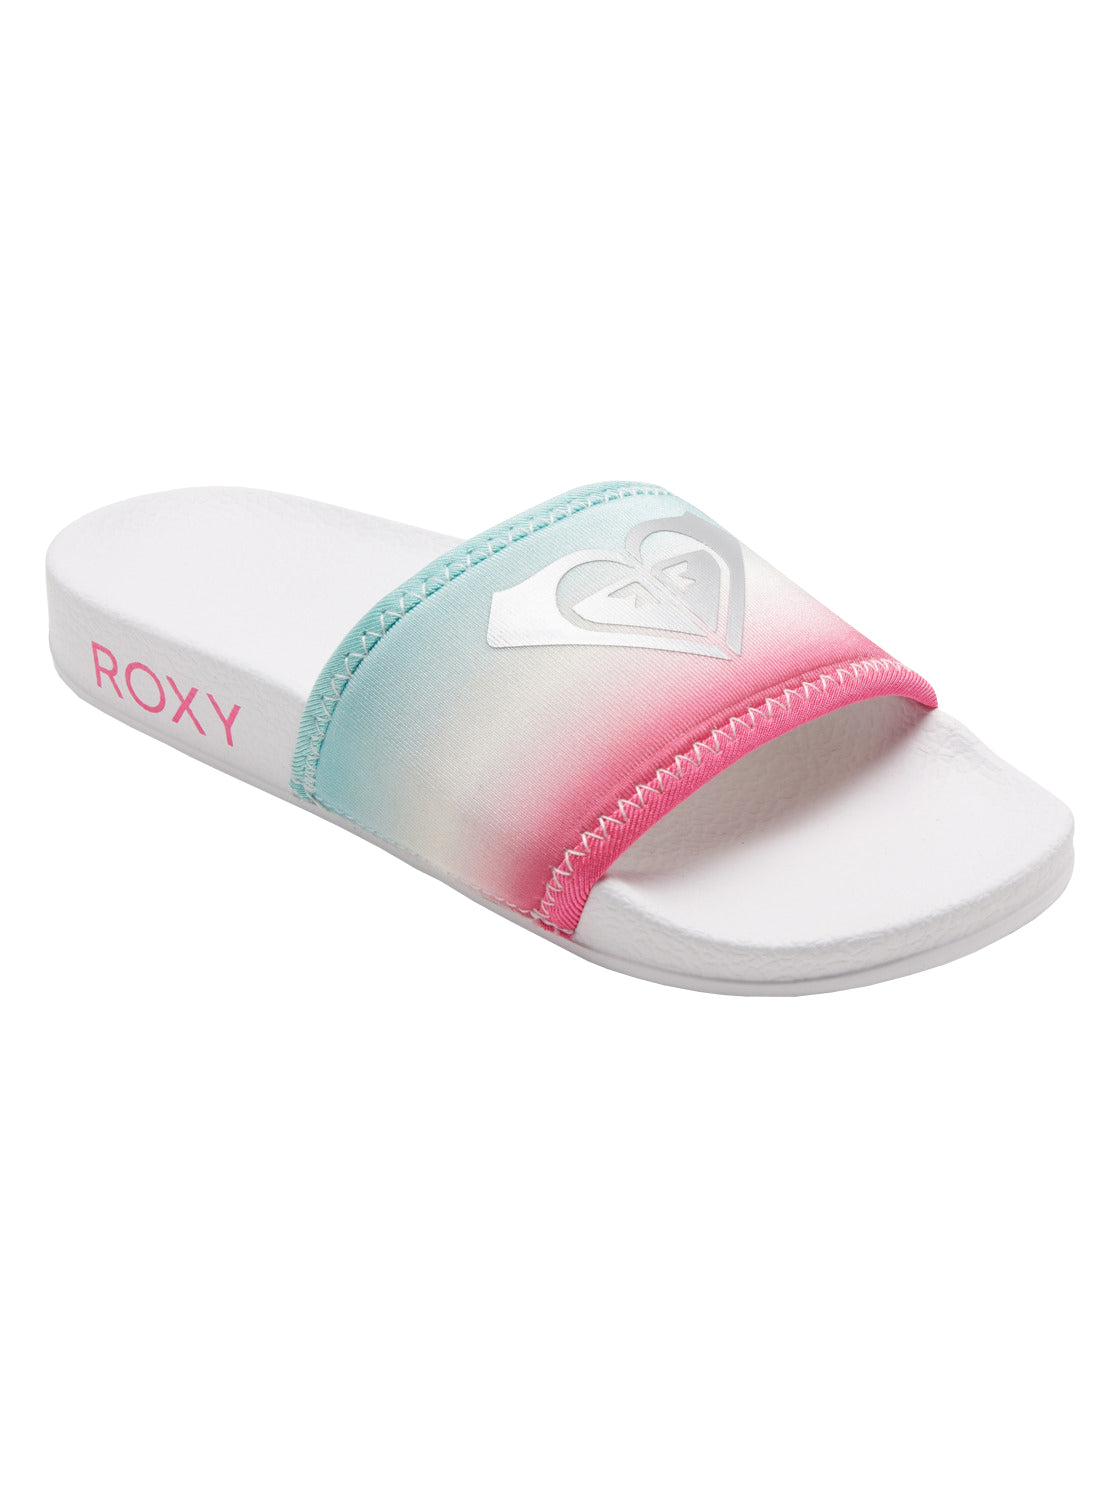 Roxy Slippy Neo Girls Sandal WCQ-White-Crazy Pink-Turquoise 13 C